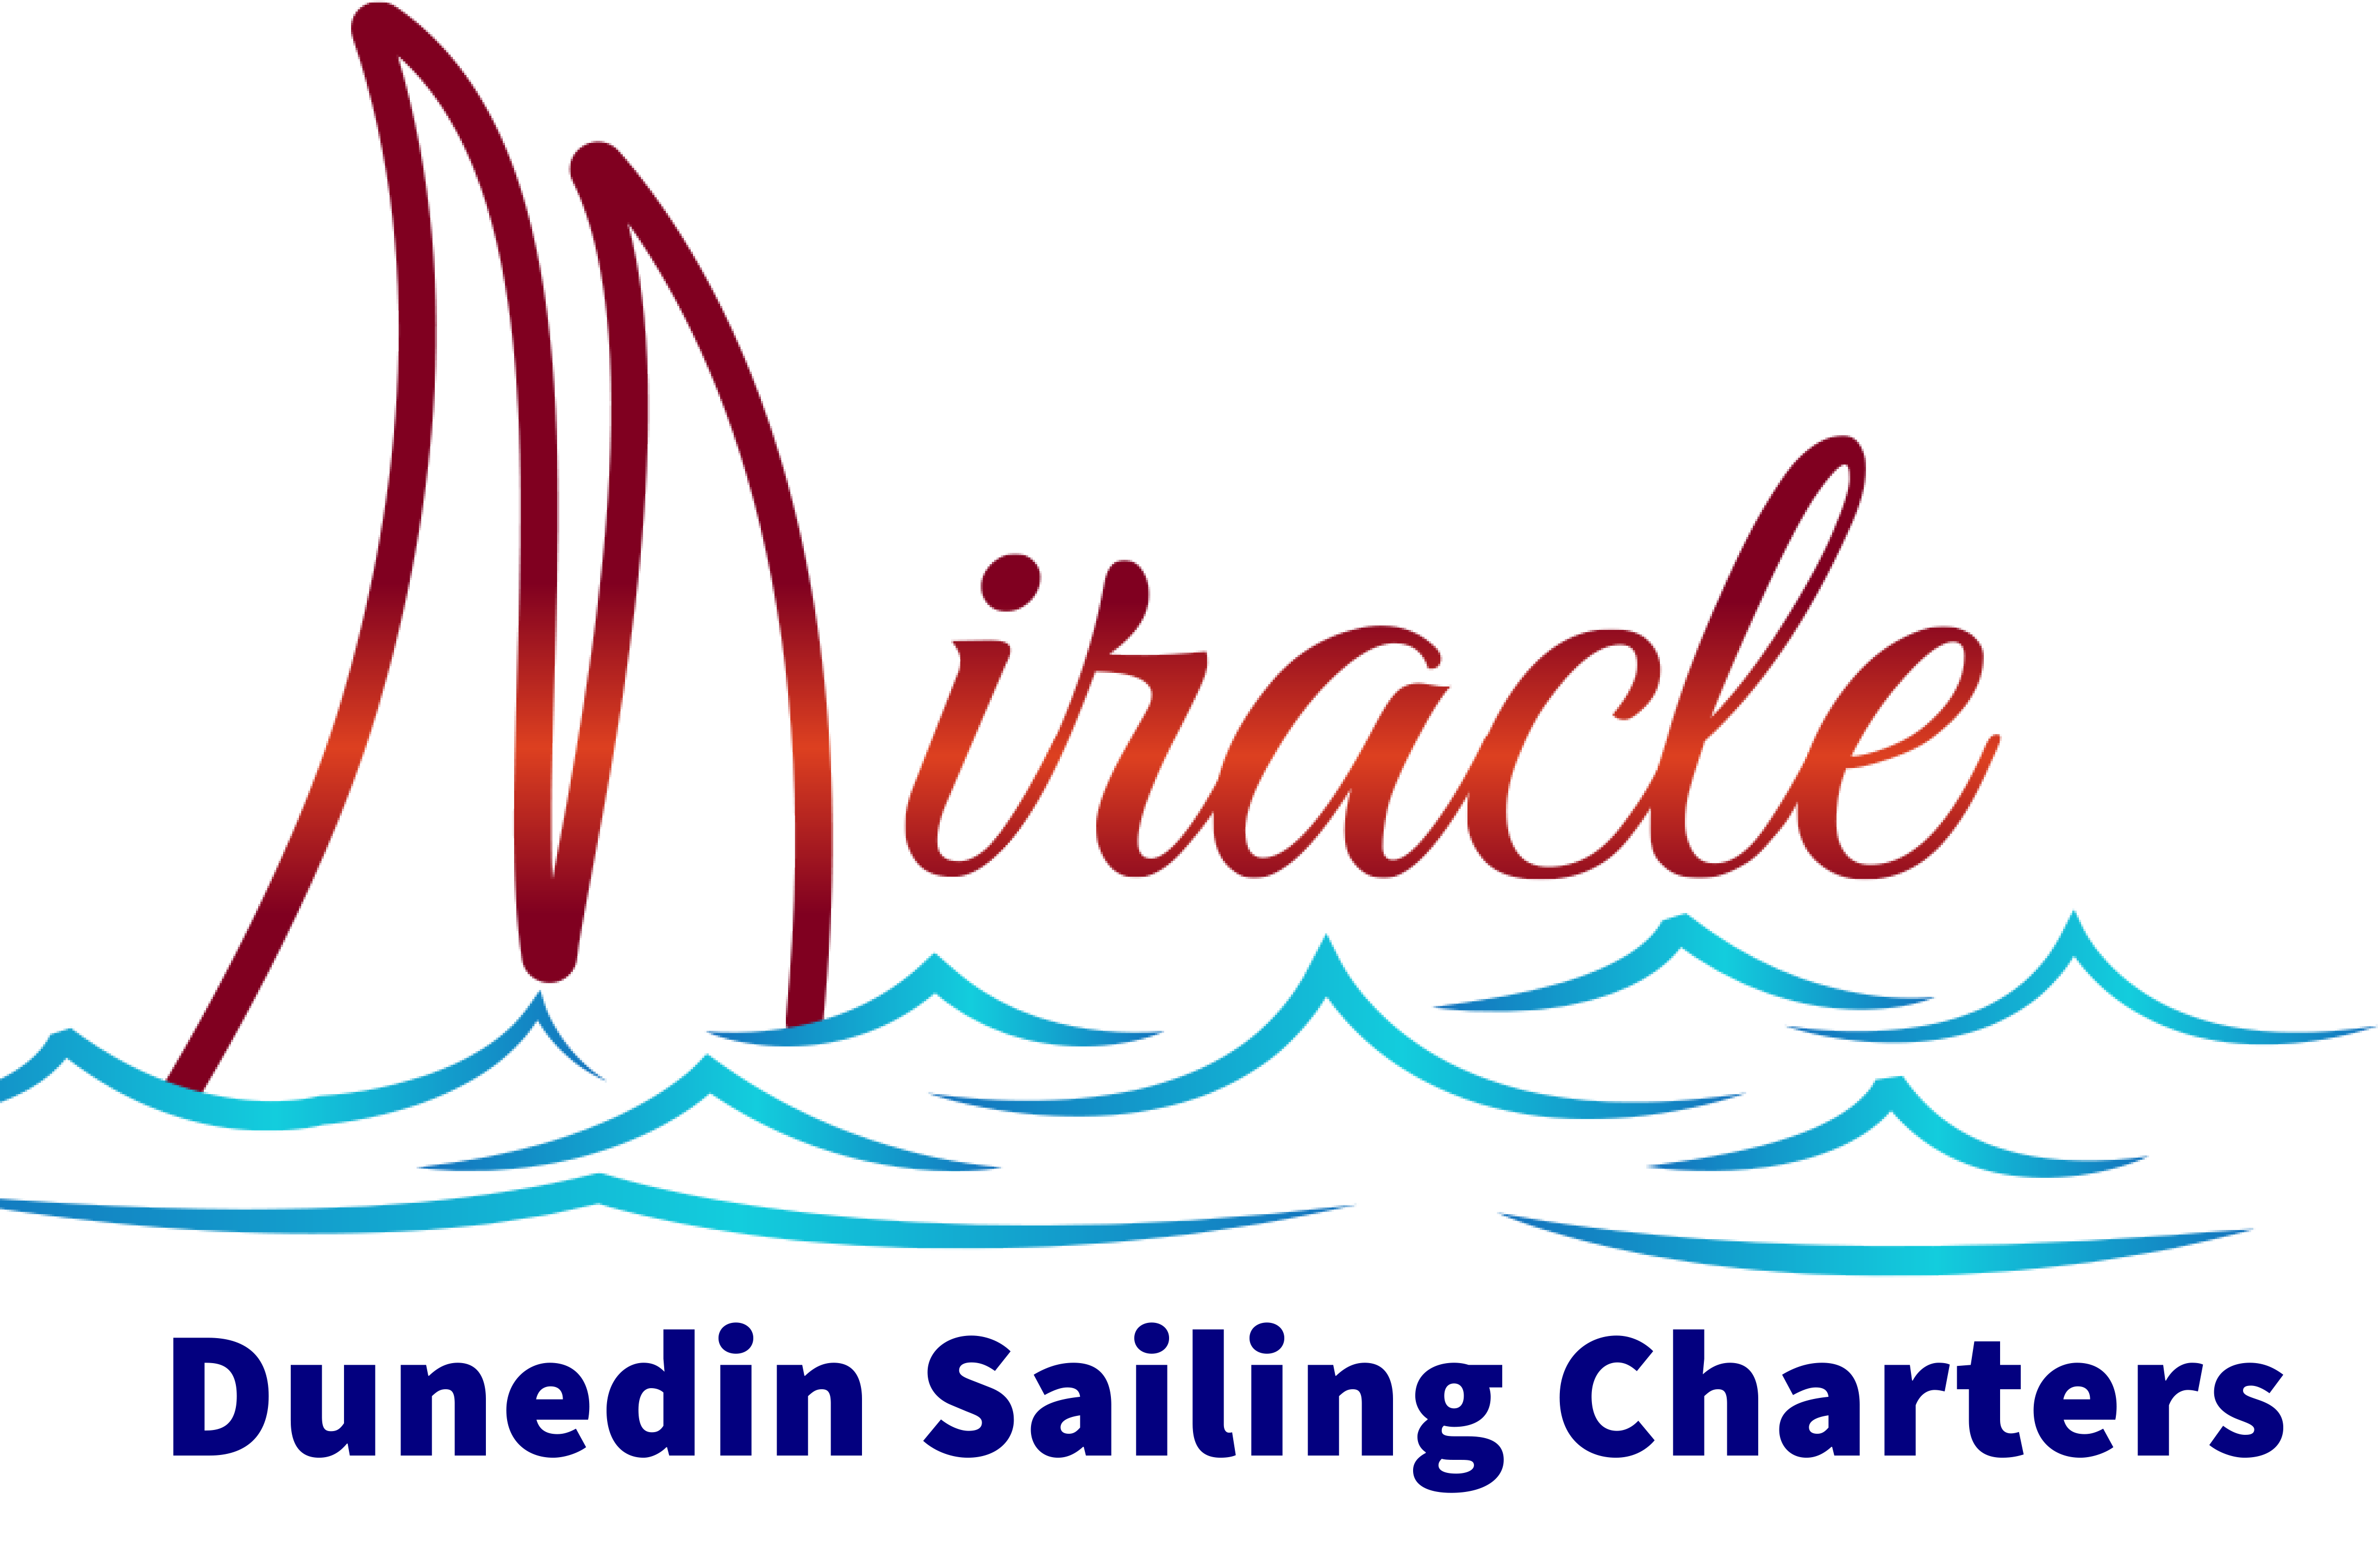 Dunedin Sailing Charters